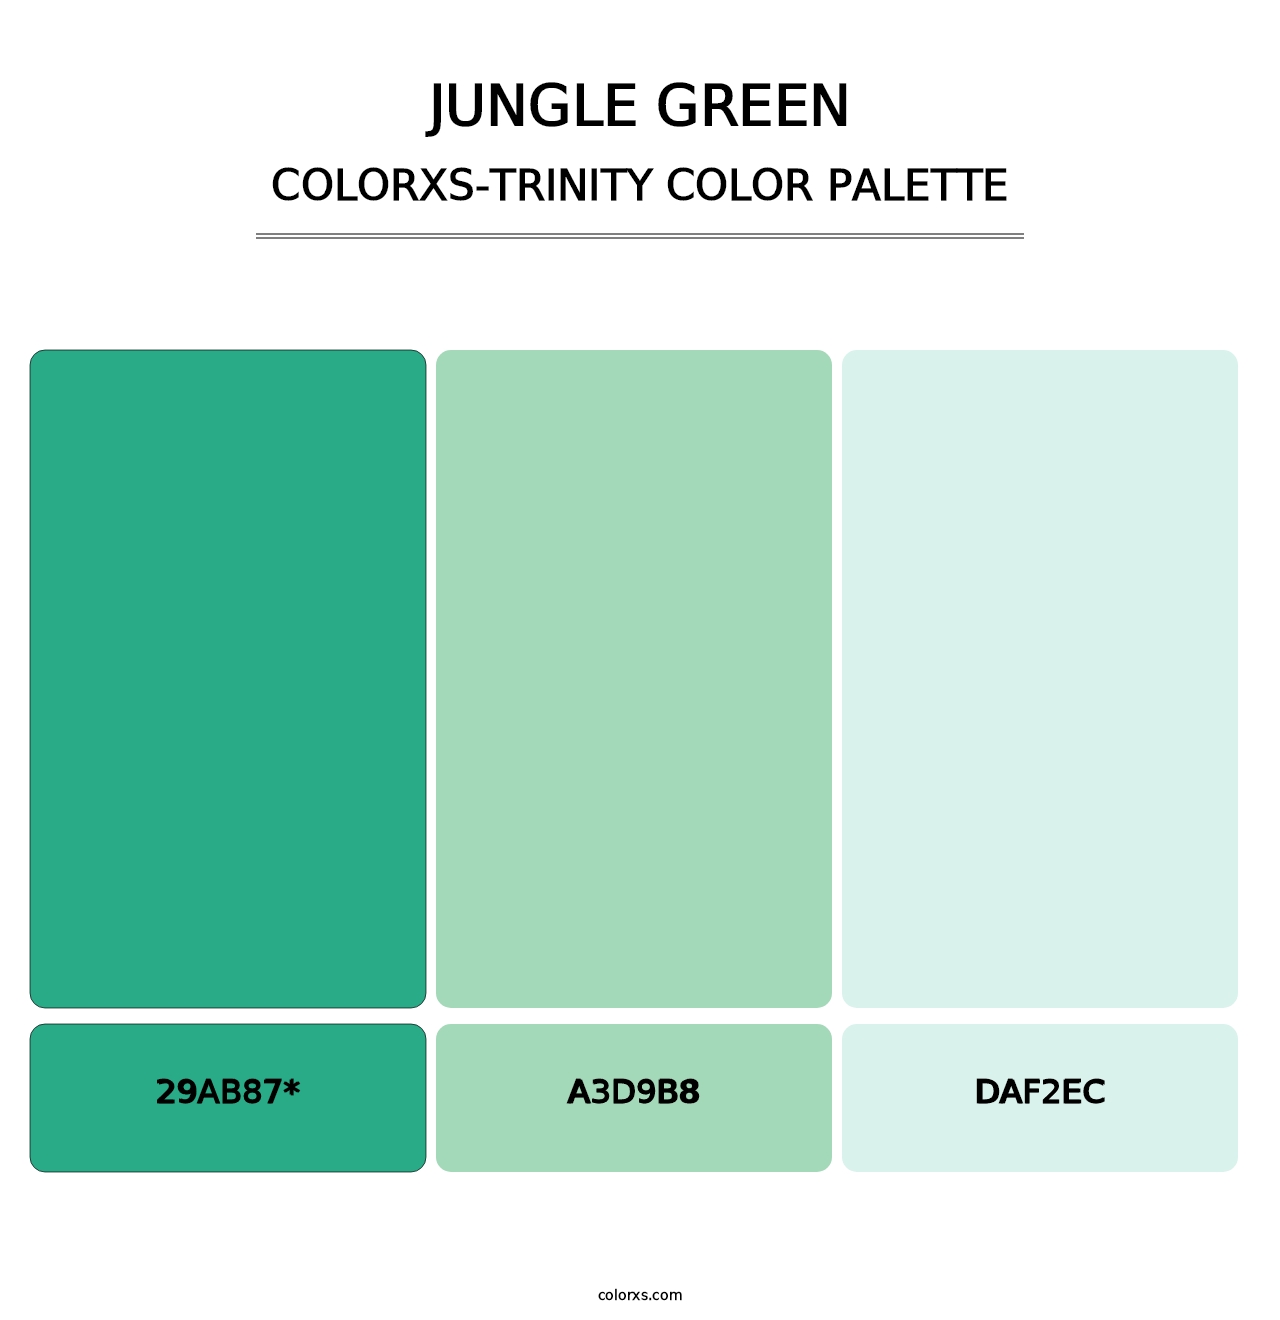 Jungle Green - Colorxs Trinity Palette